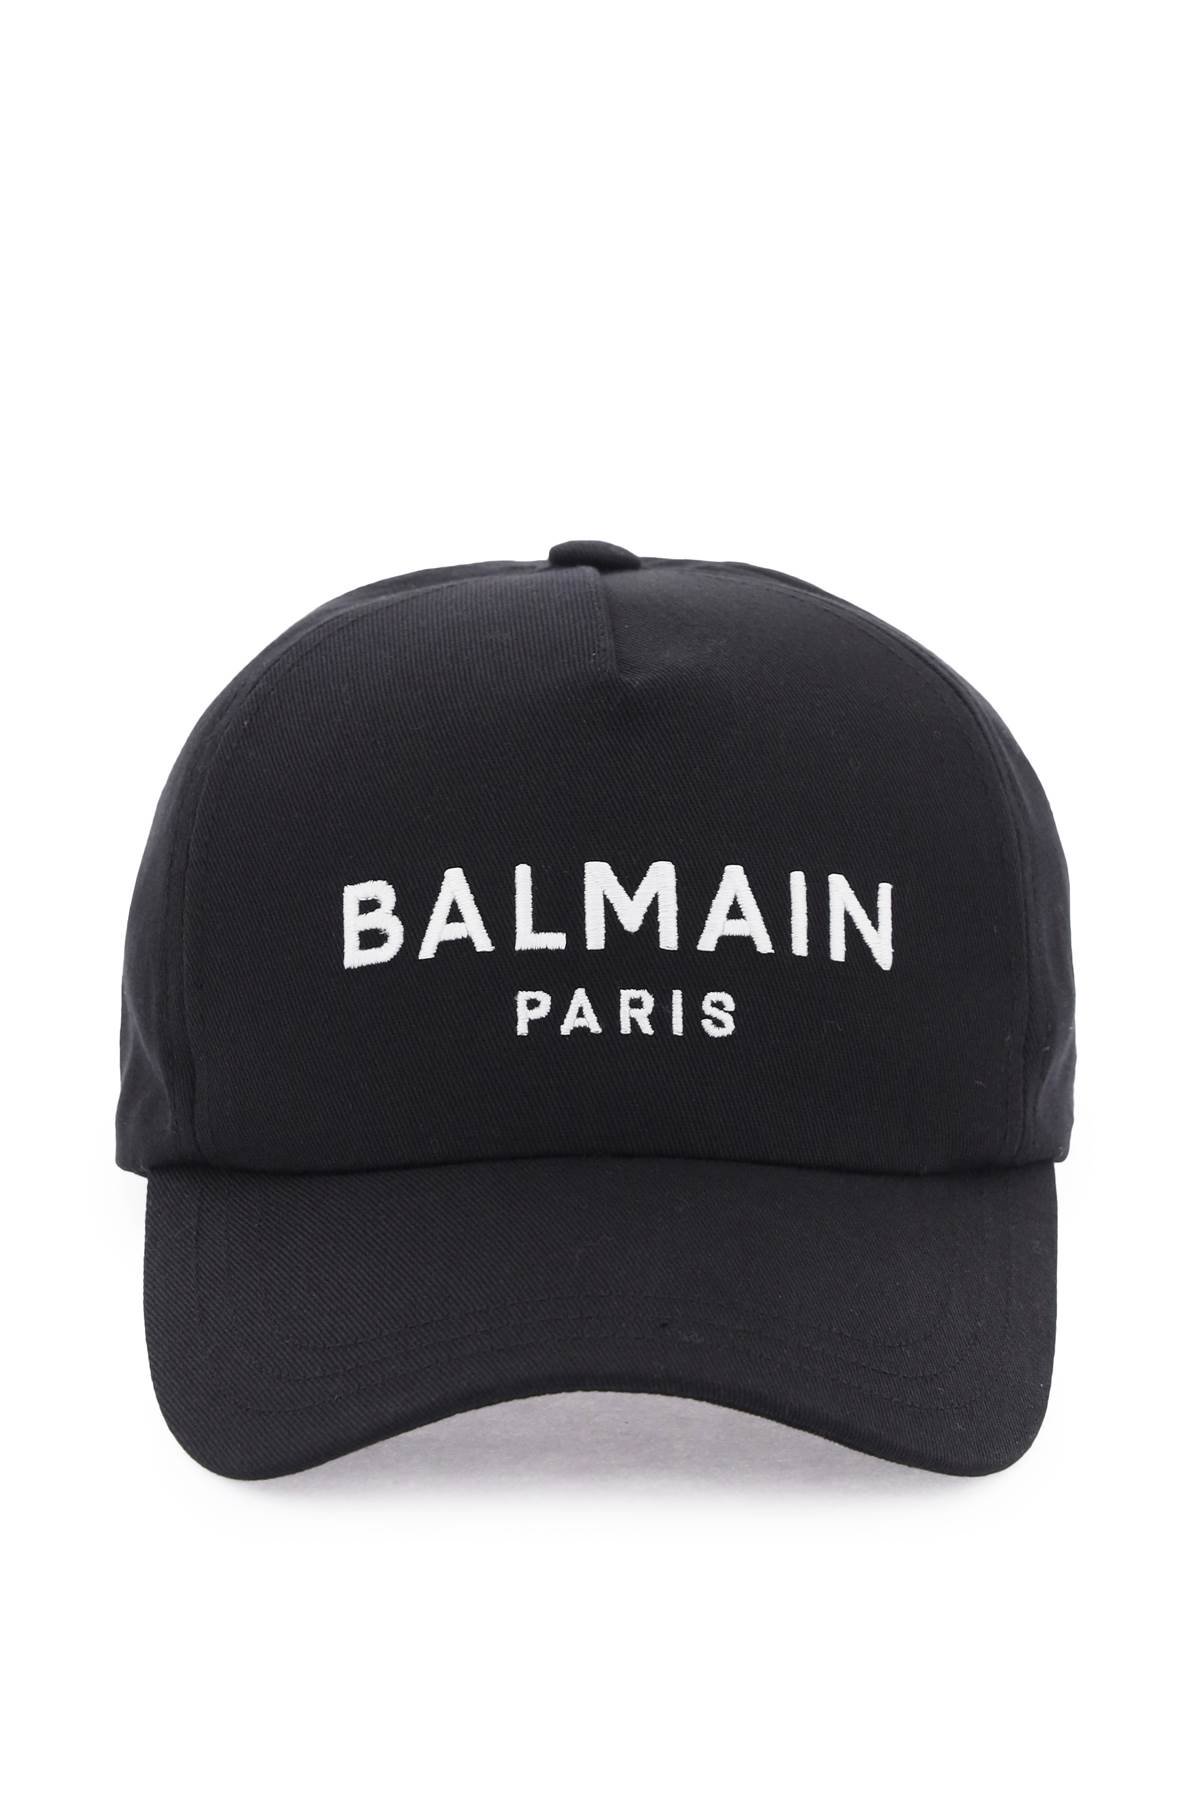 BALMAIN BASEBALL CAP WITH LOGO BLACK | BALMAIN | KRISSHOP - SINGAPORE ...